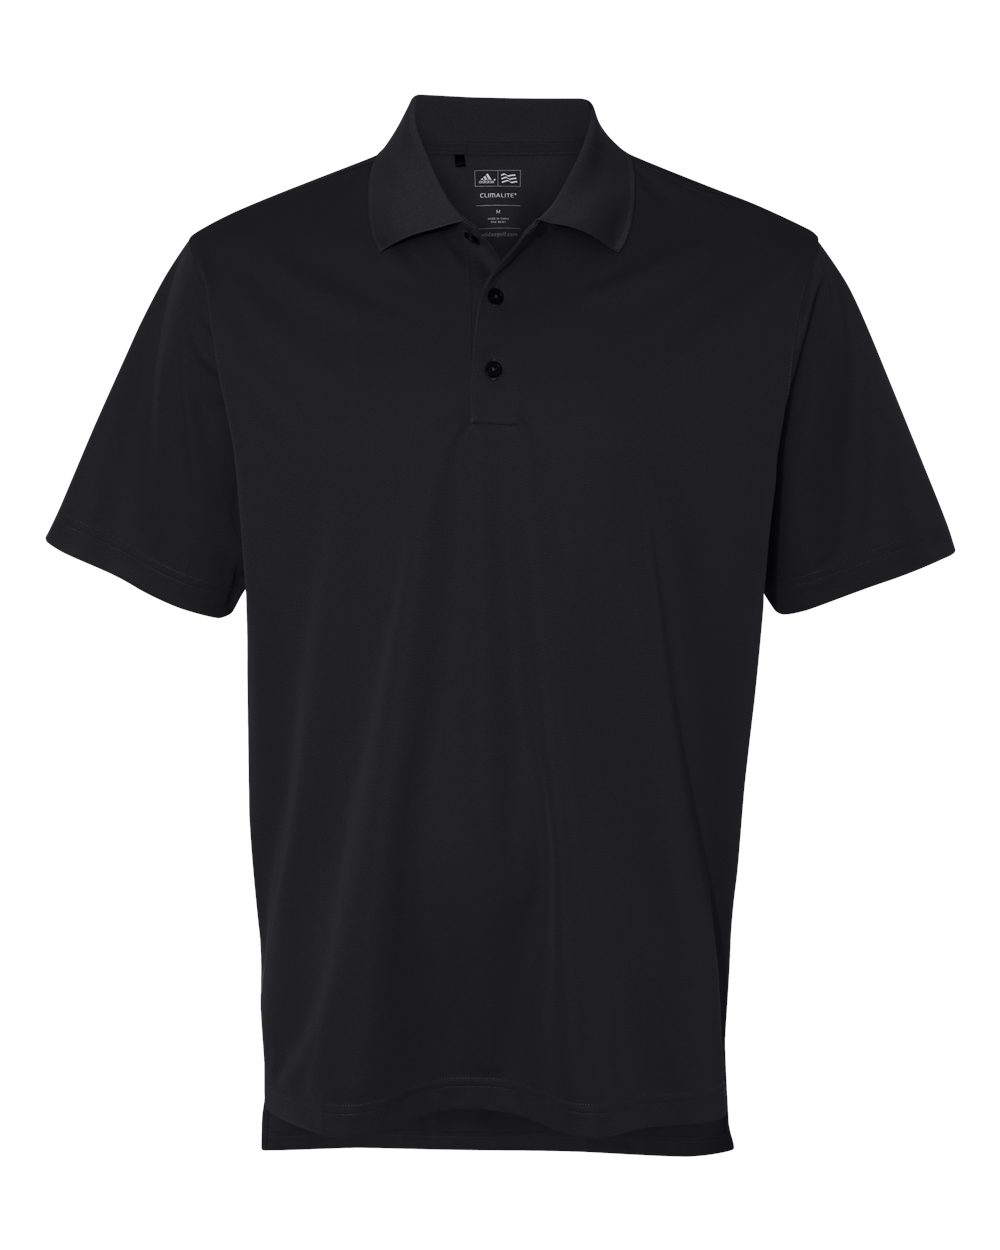 ADIDAS A130 - Men's ClimaLite Basic Pique Polo $21.65 - Men's Sport Shirts